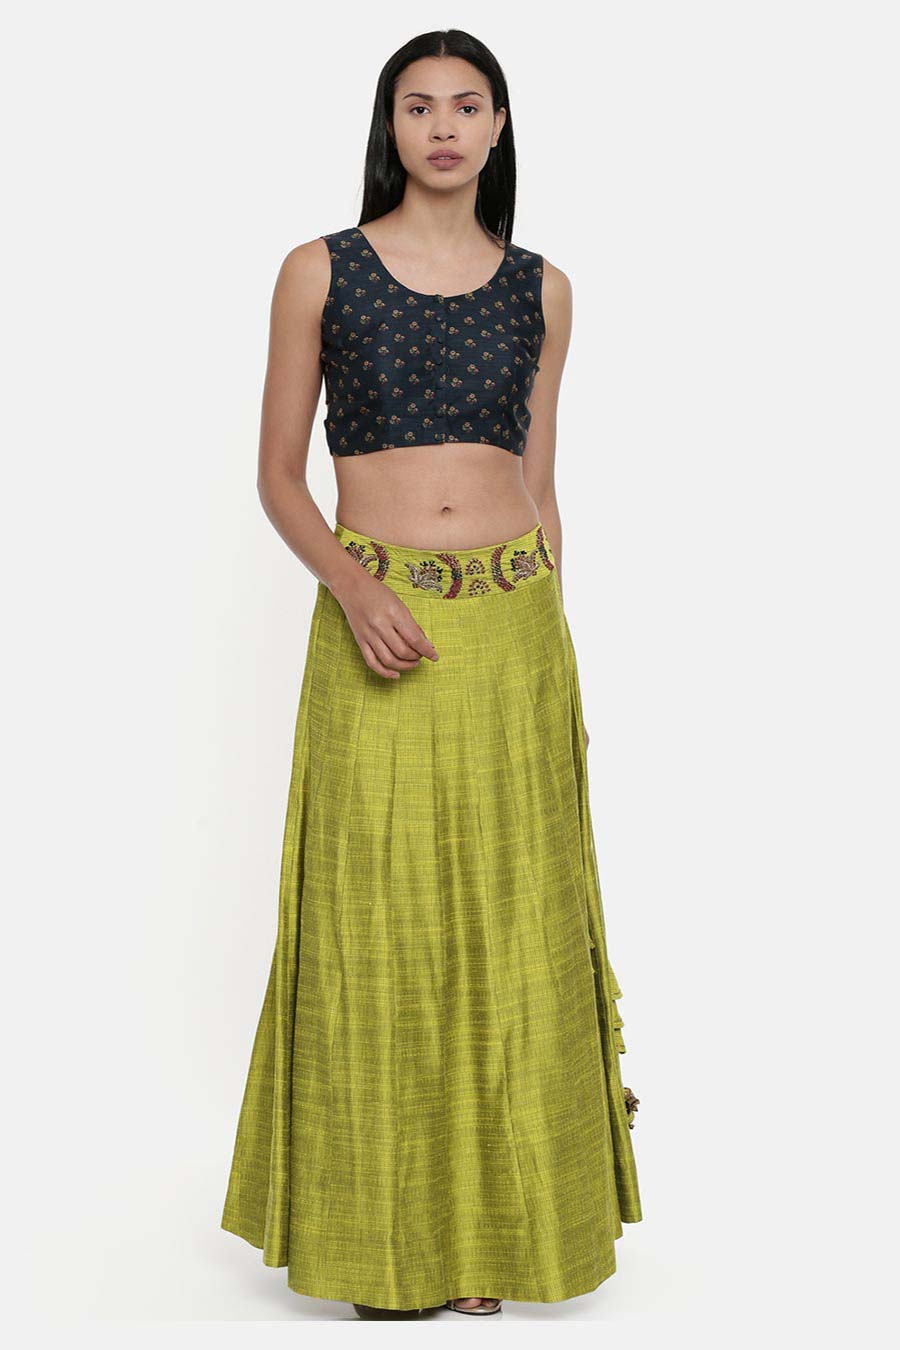 Neon Green Embroidered Lehenga Skirt